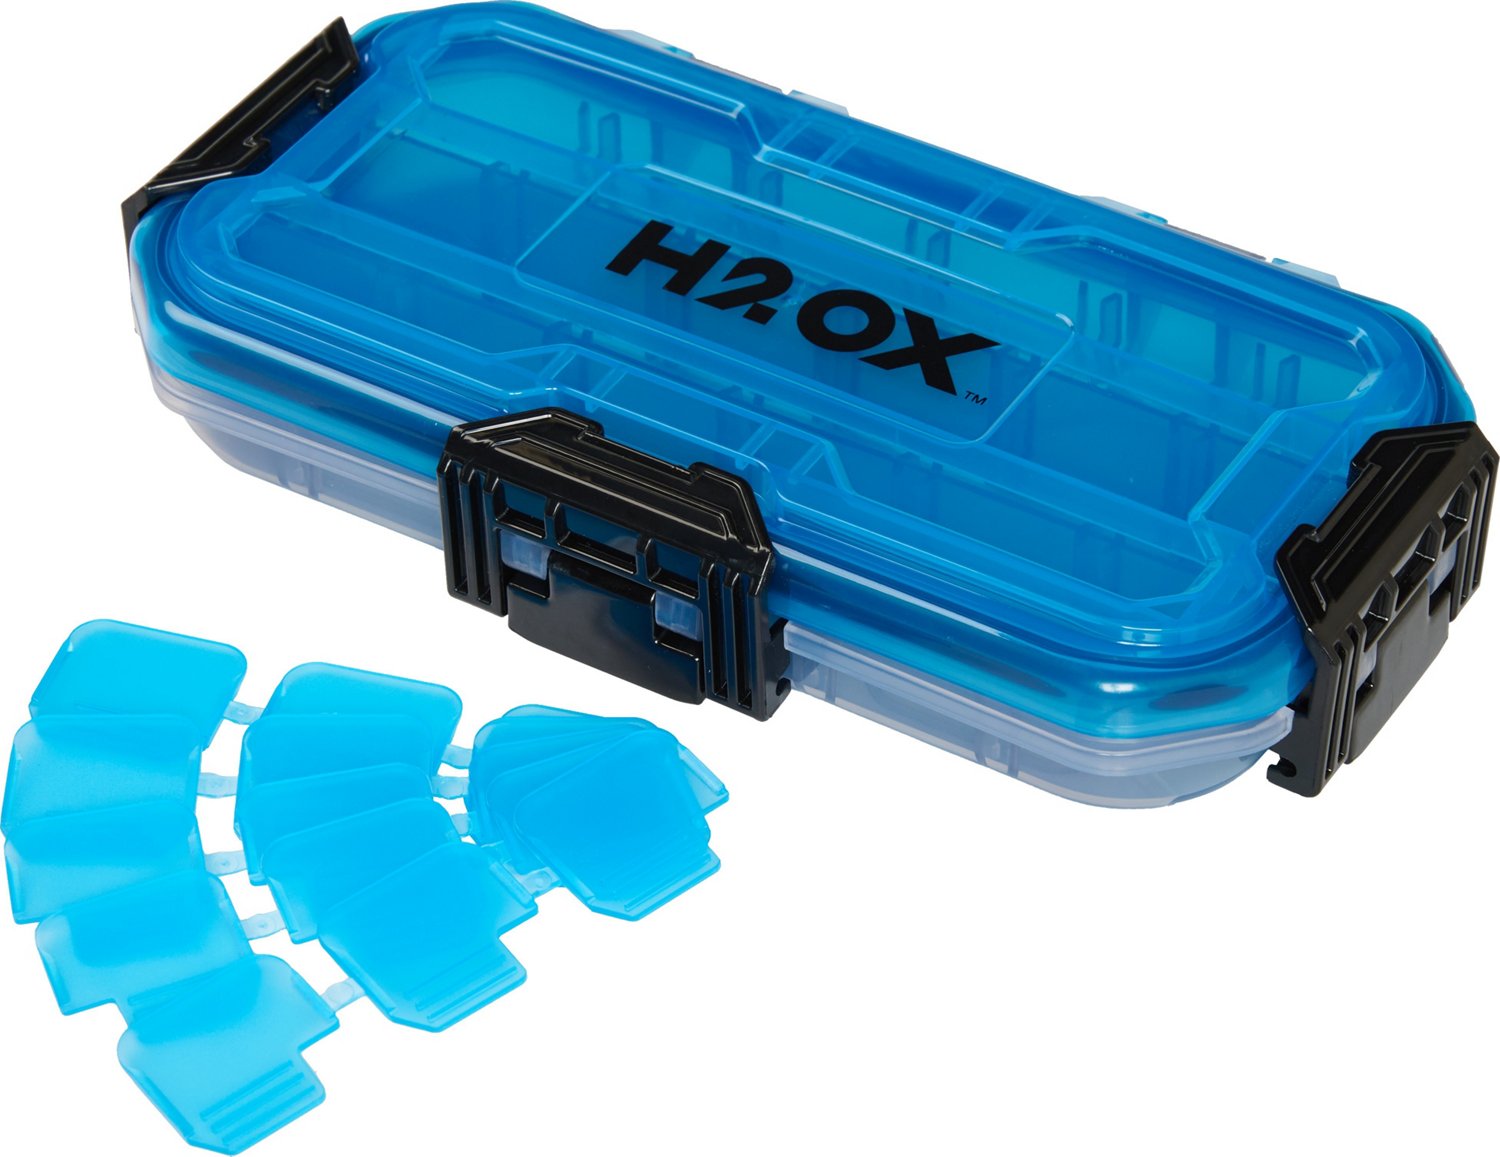 Extra-Strength Utility Box - ES7 - 6 3/4 x 4 5/8 x 2 1/2 – MasonBox